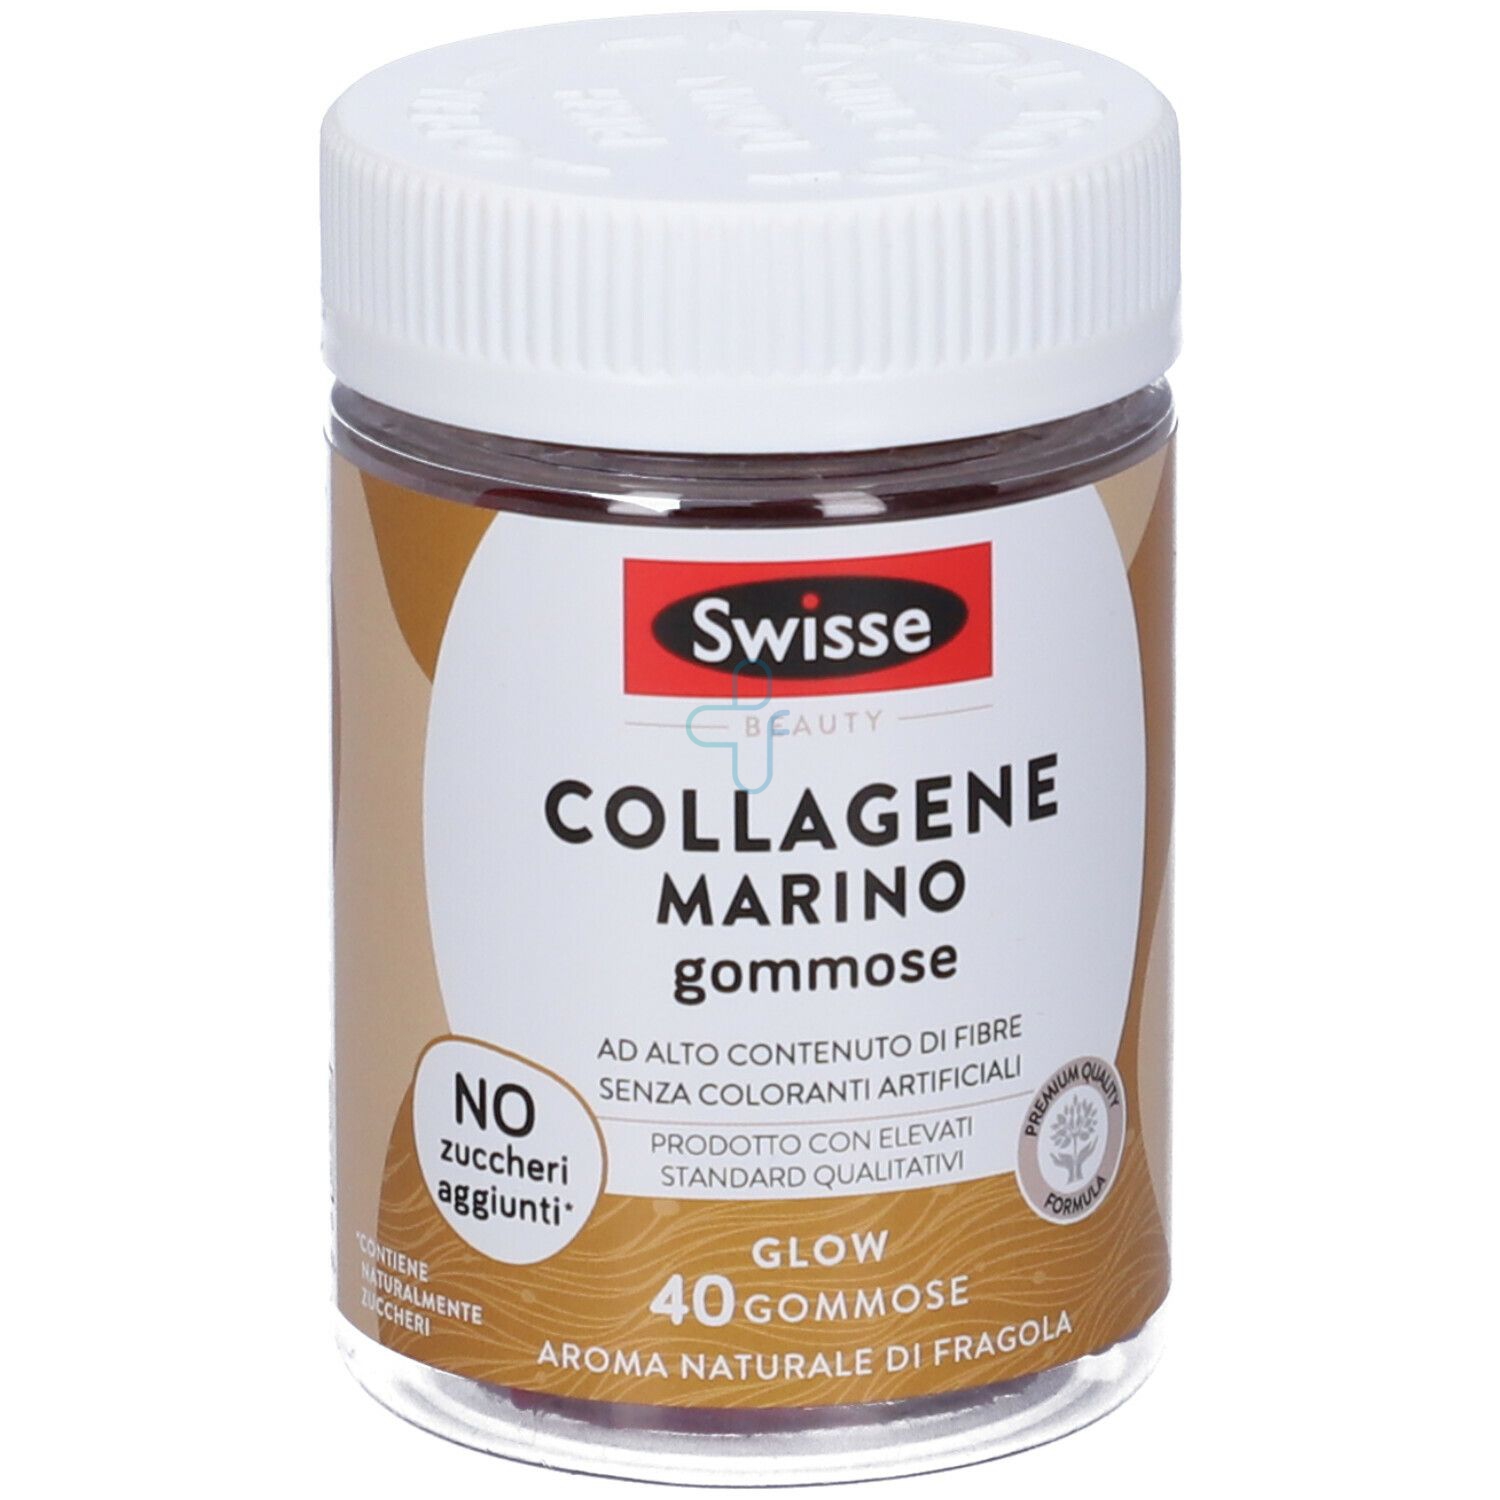 Swisse Collagene Marino 40 gommose